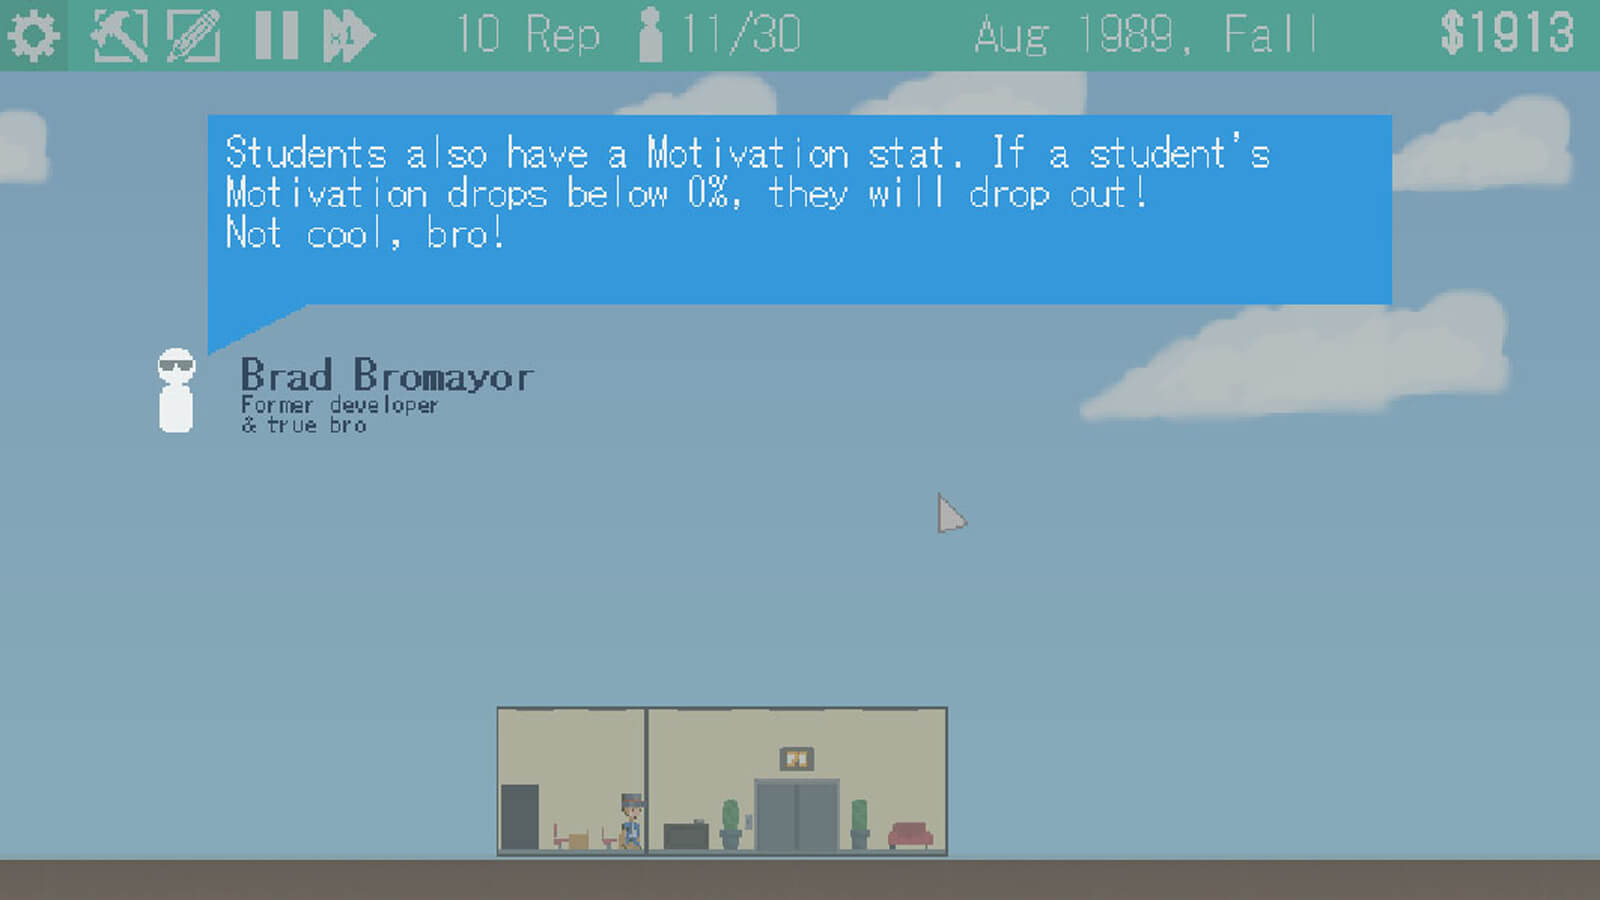 Former developer Brad Bromayor gives the player info on student motivation stats. 